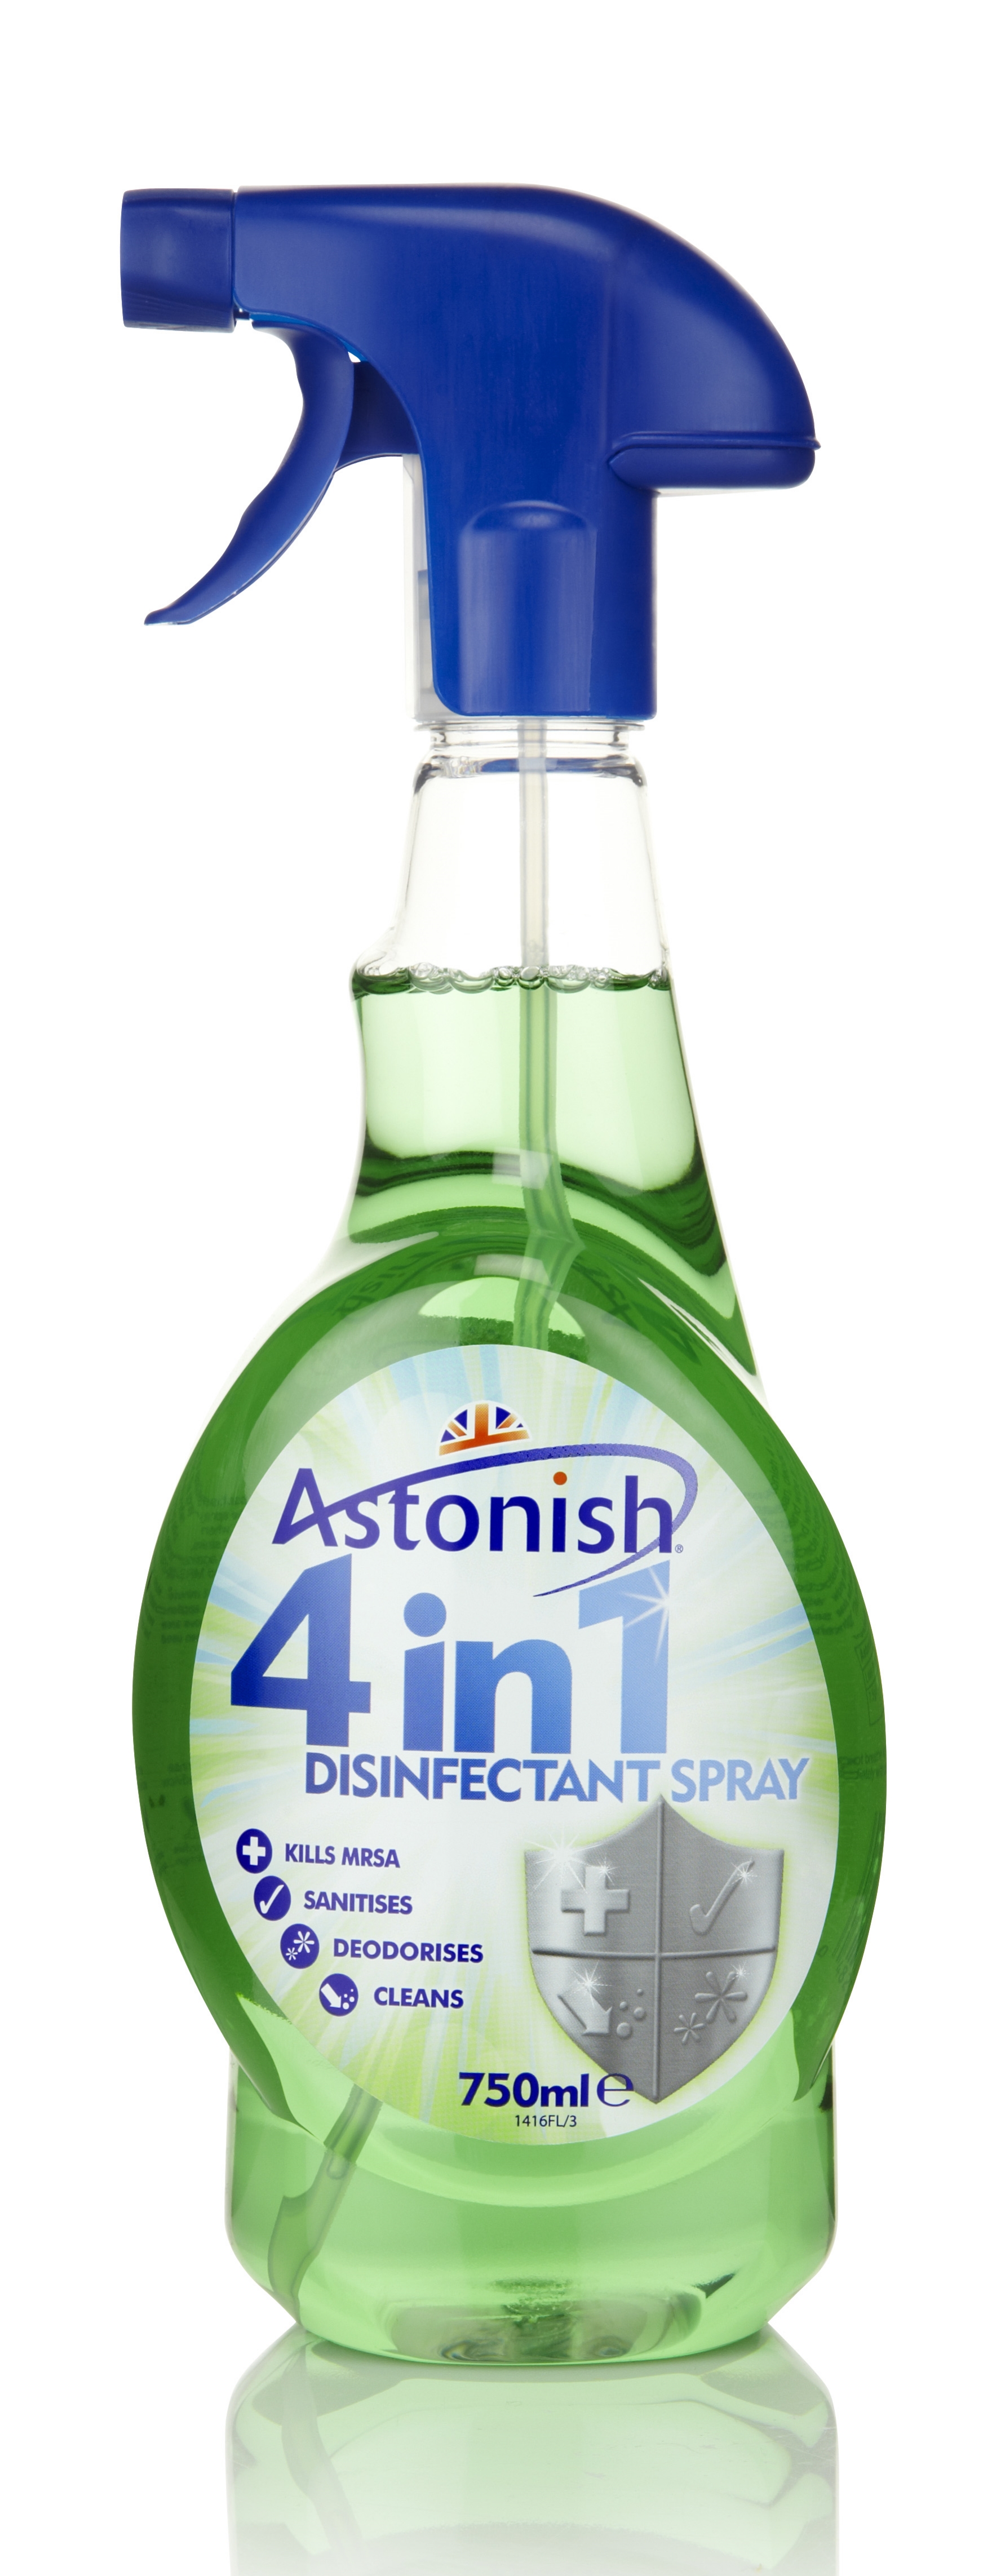 Astonish 4 in 1 Disinfectant Spray 750ml.jpg